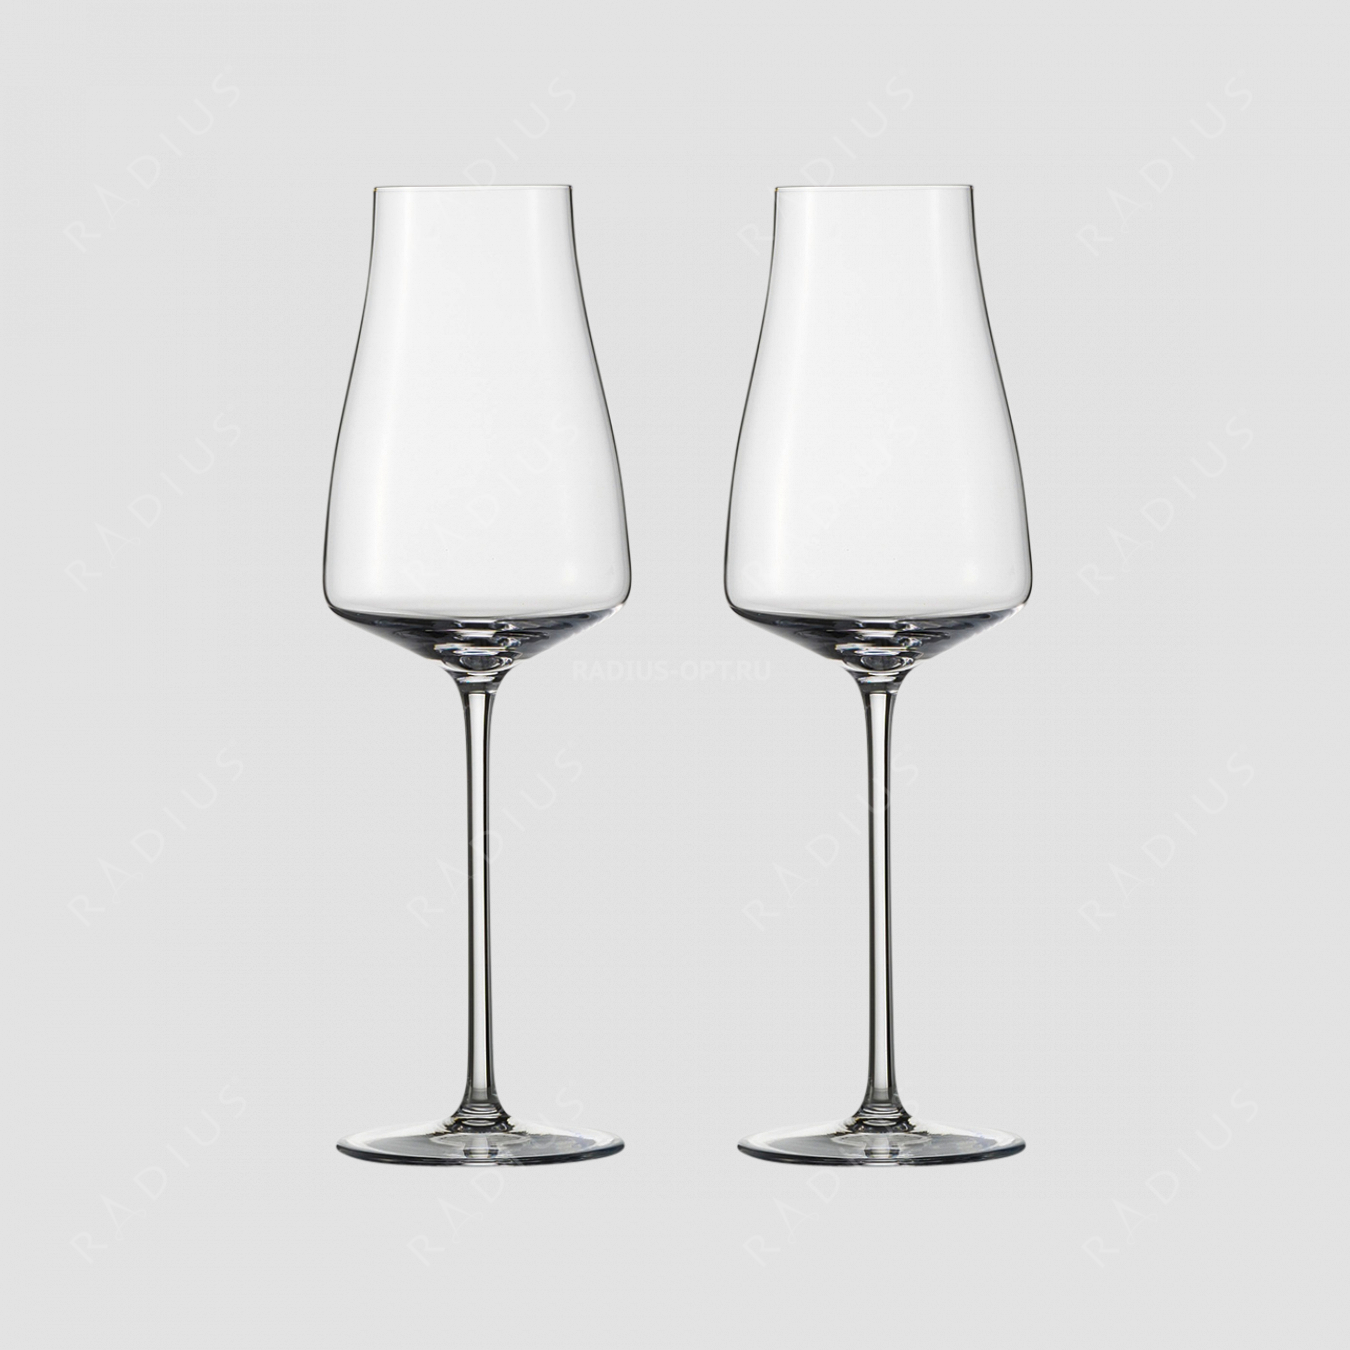 Набор бокалов для красного вина RIOJA, ручная работа, объем 545 мл, 2 шт., серия The Moment, ZWIESEL GLAS, Германия